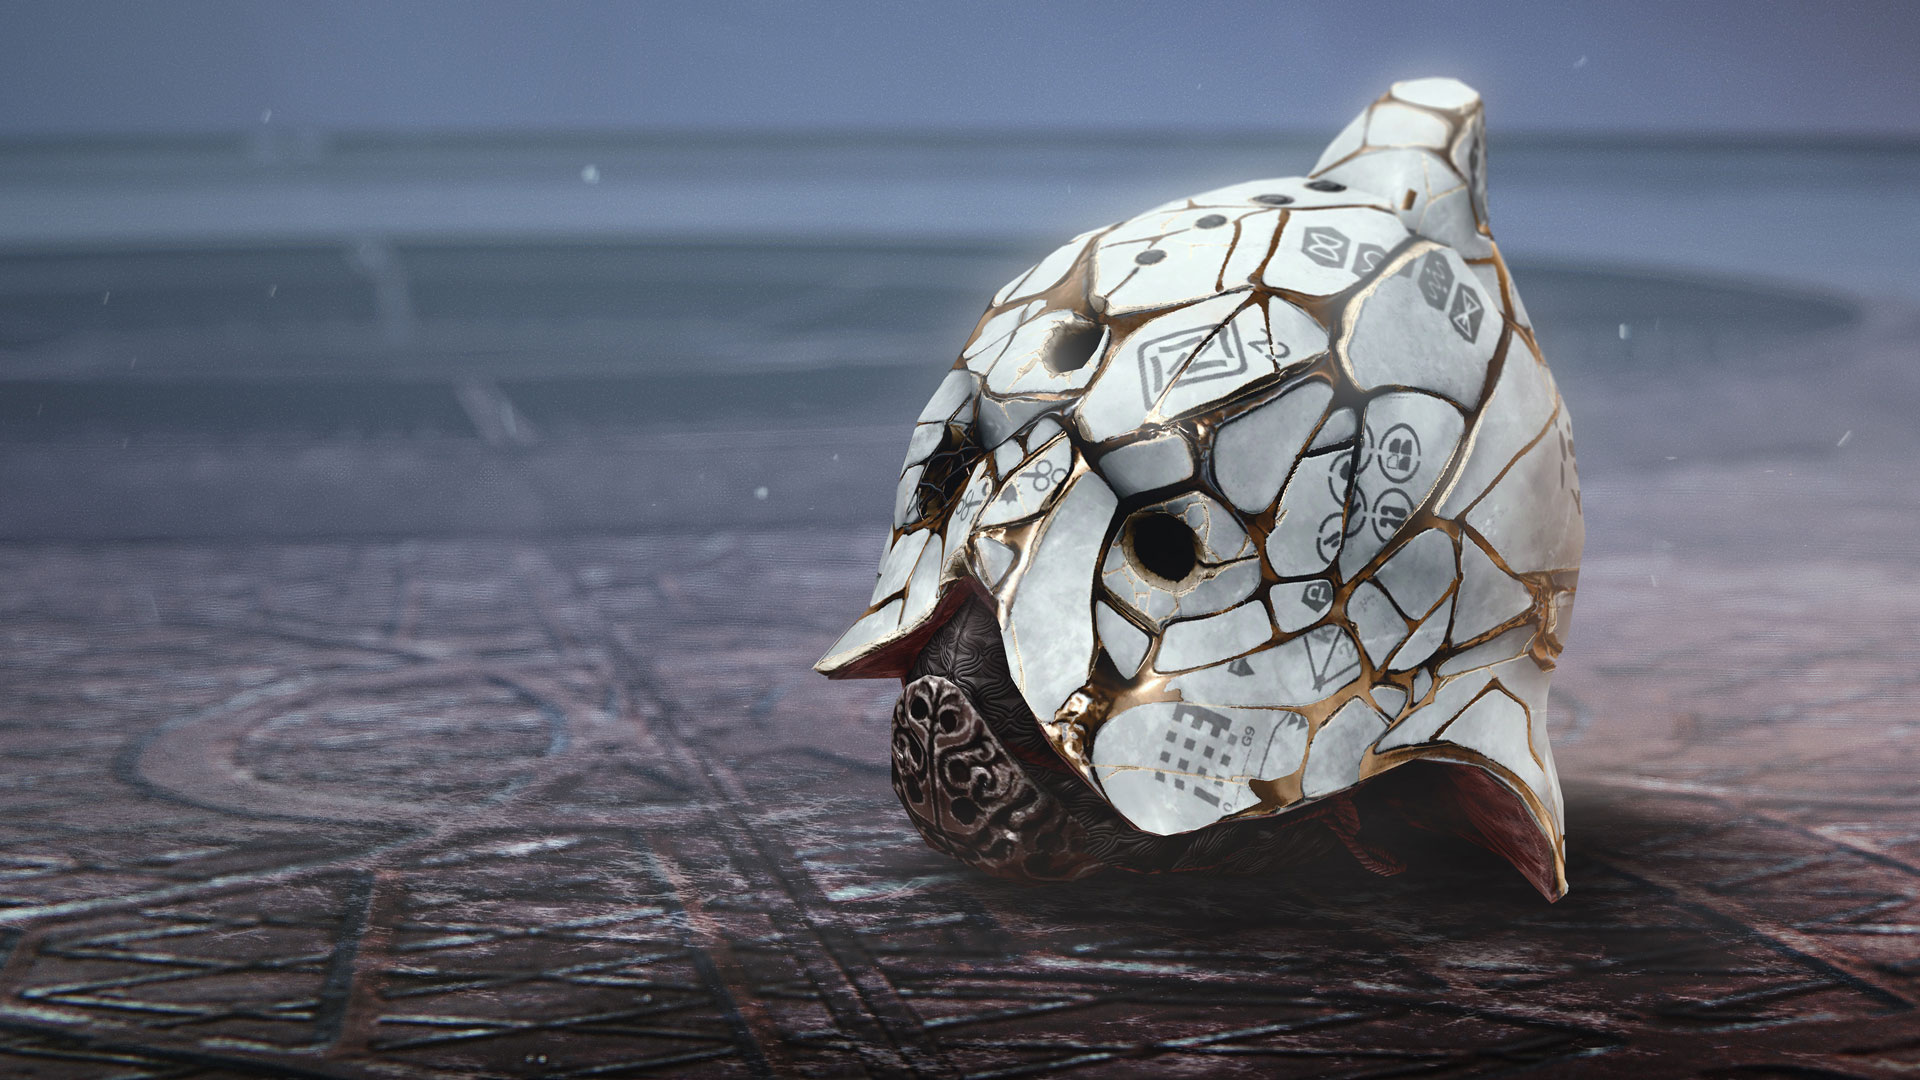 Destiny 2 Beyond Light Exotic armor: The Precious Scars helmet placed on the ground.